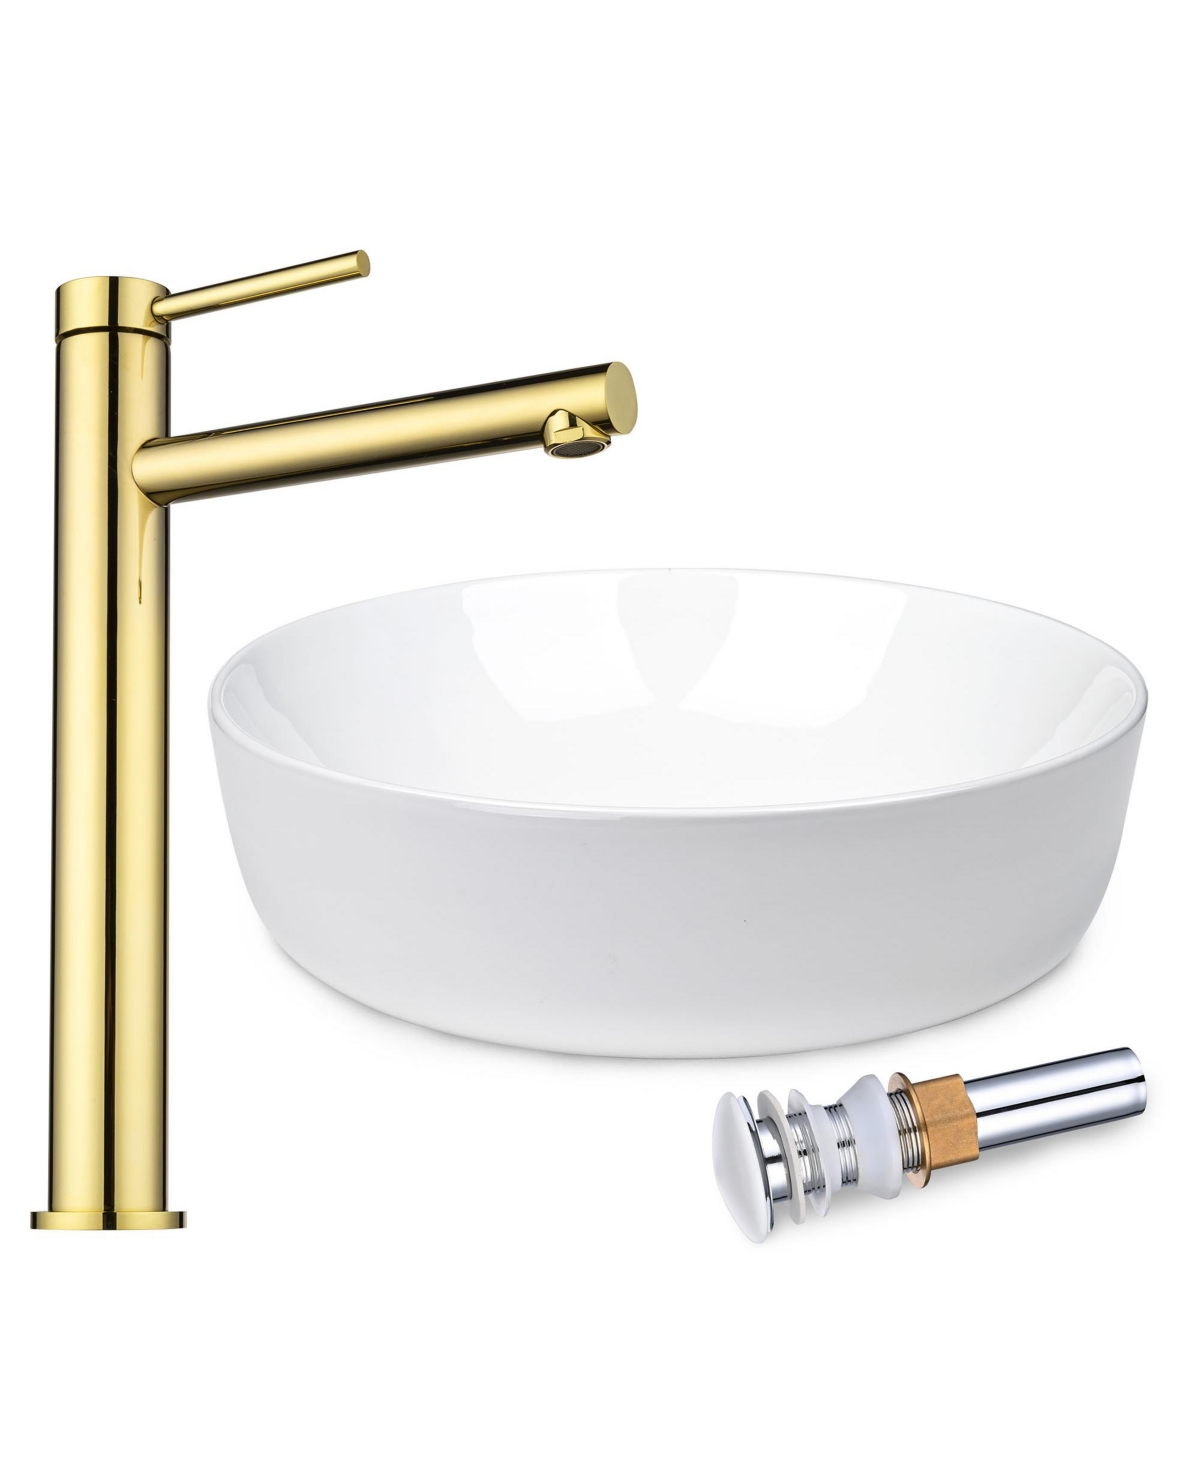 Round Bathroom Countertop Vessel Sink Faucet Set Vanity Mixer Tap w/Pop Up Drain - Natural